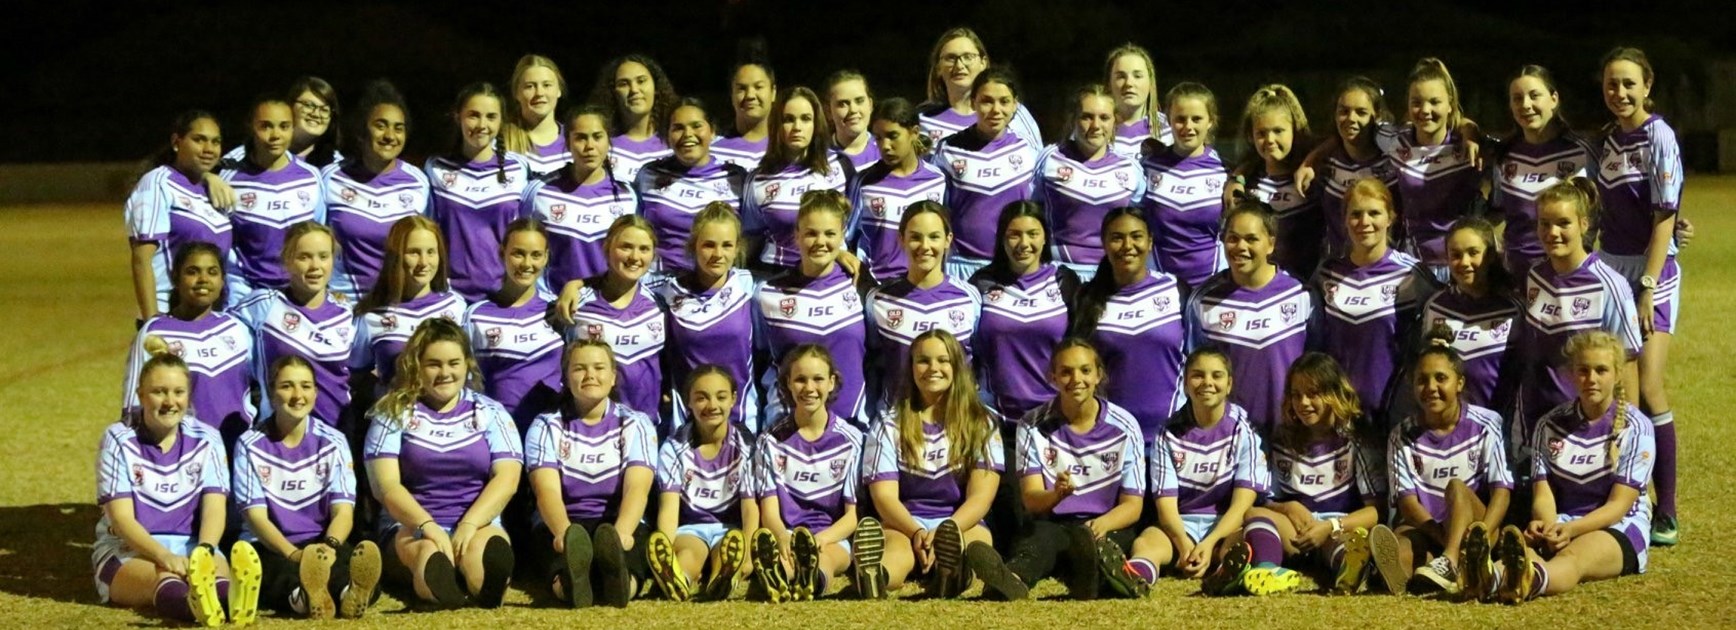 Toowoomba girls teams need 2019 season staff